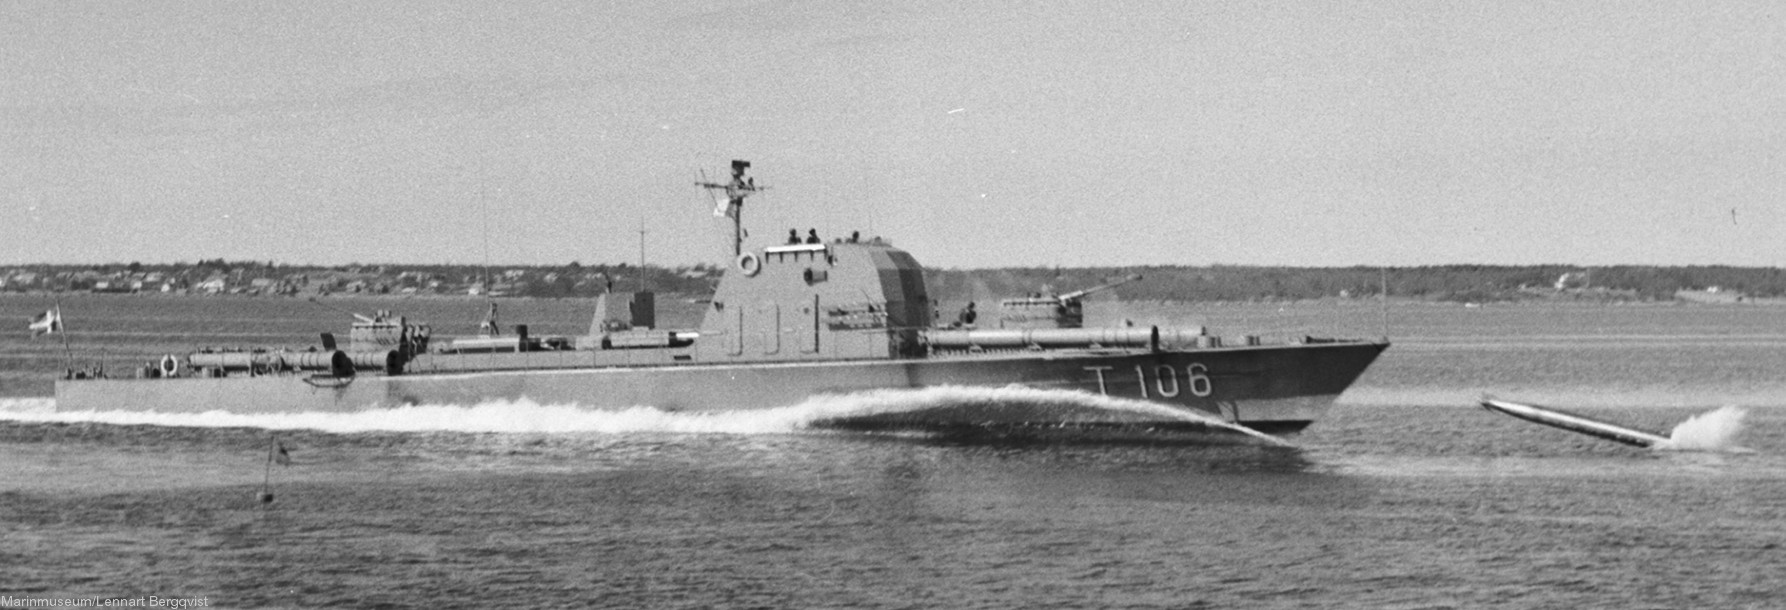 t106 rigel hms hswms plejad class fast attack craft torpedo boat vessel swedish navy svenska marinen 07